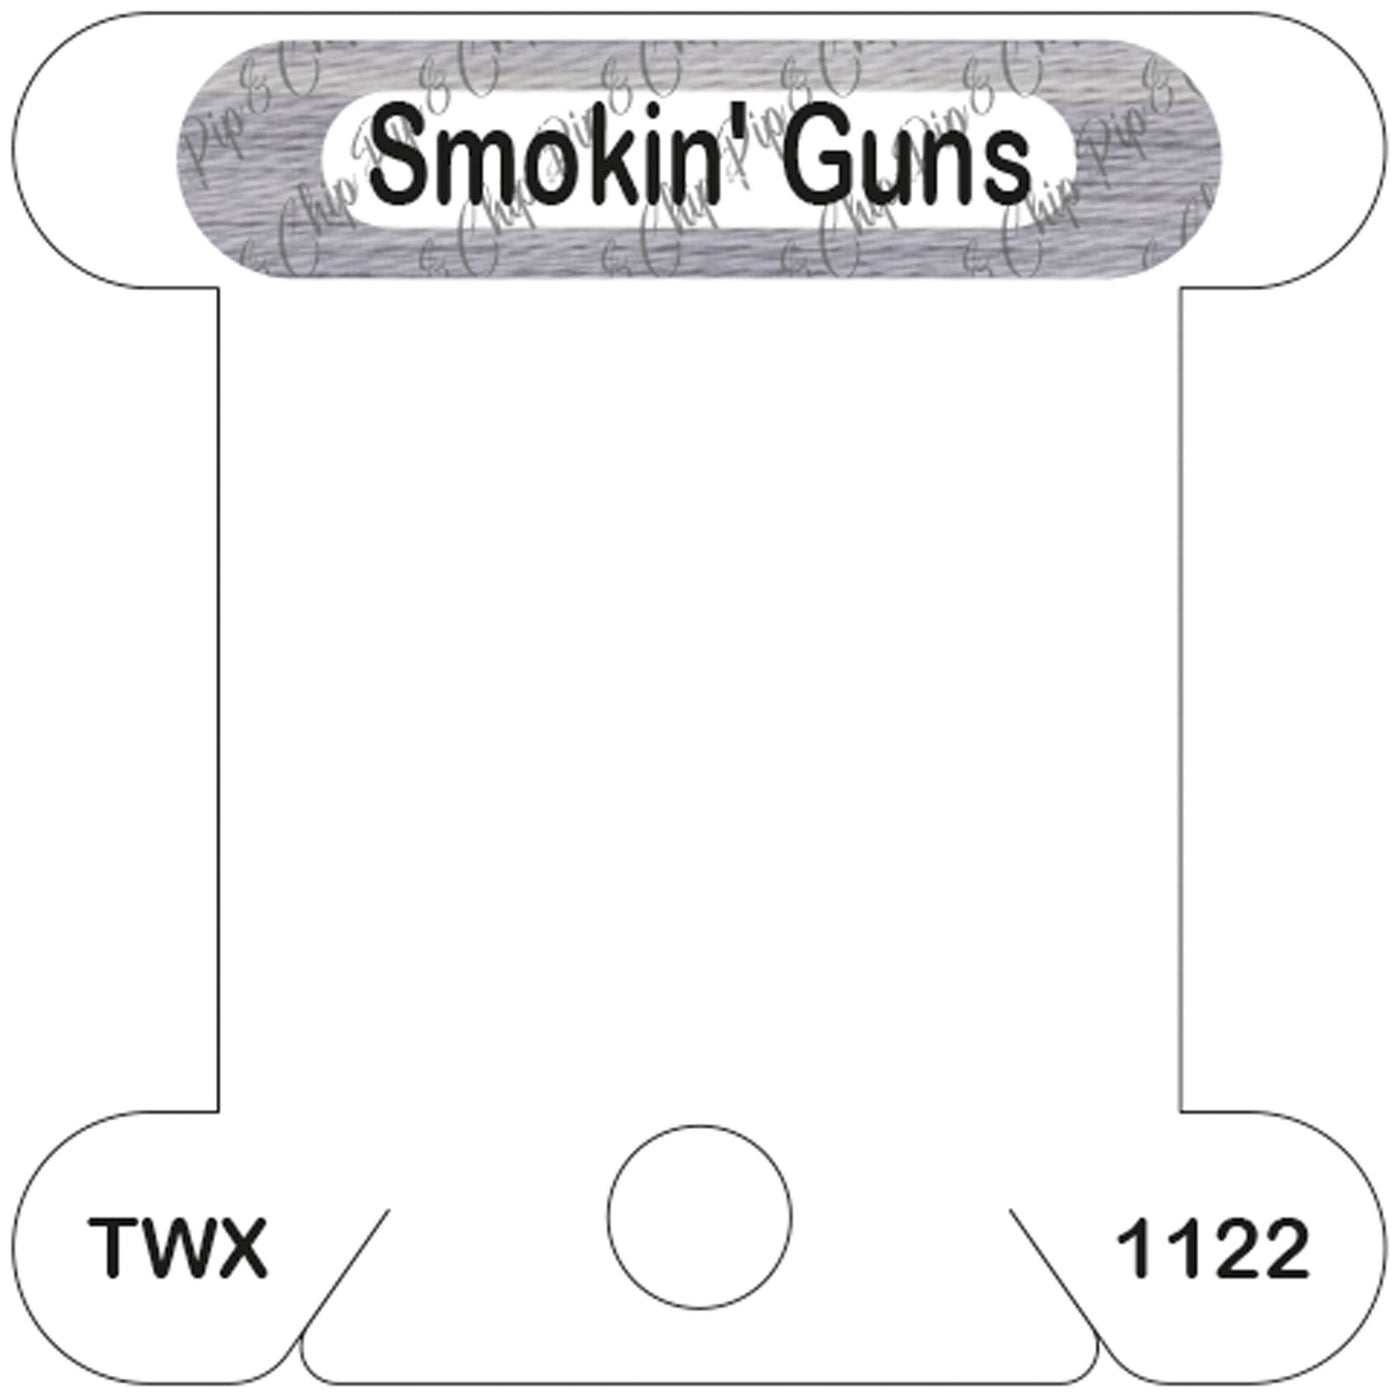 ThreadworX Smokin' Guns acrylic bobbin